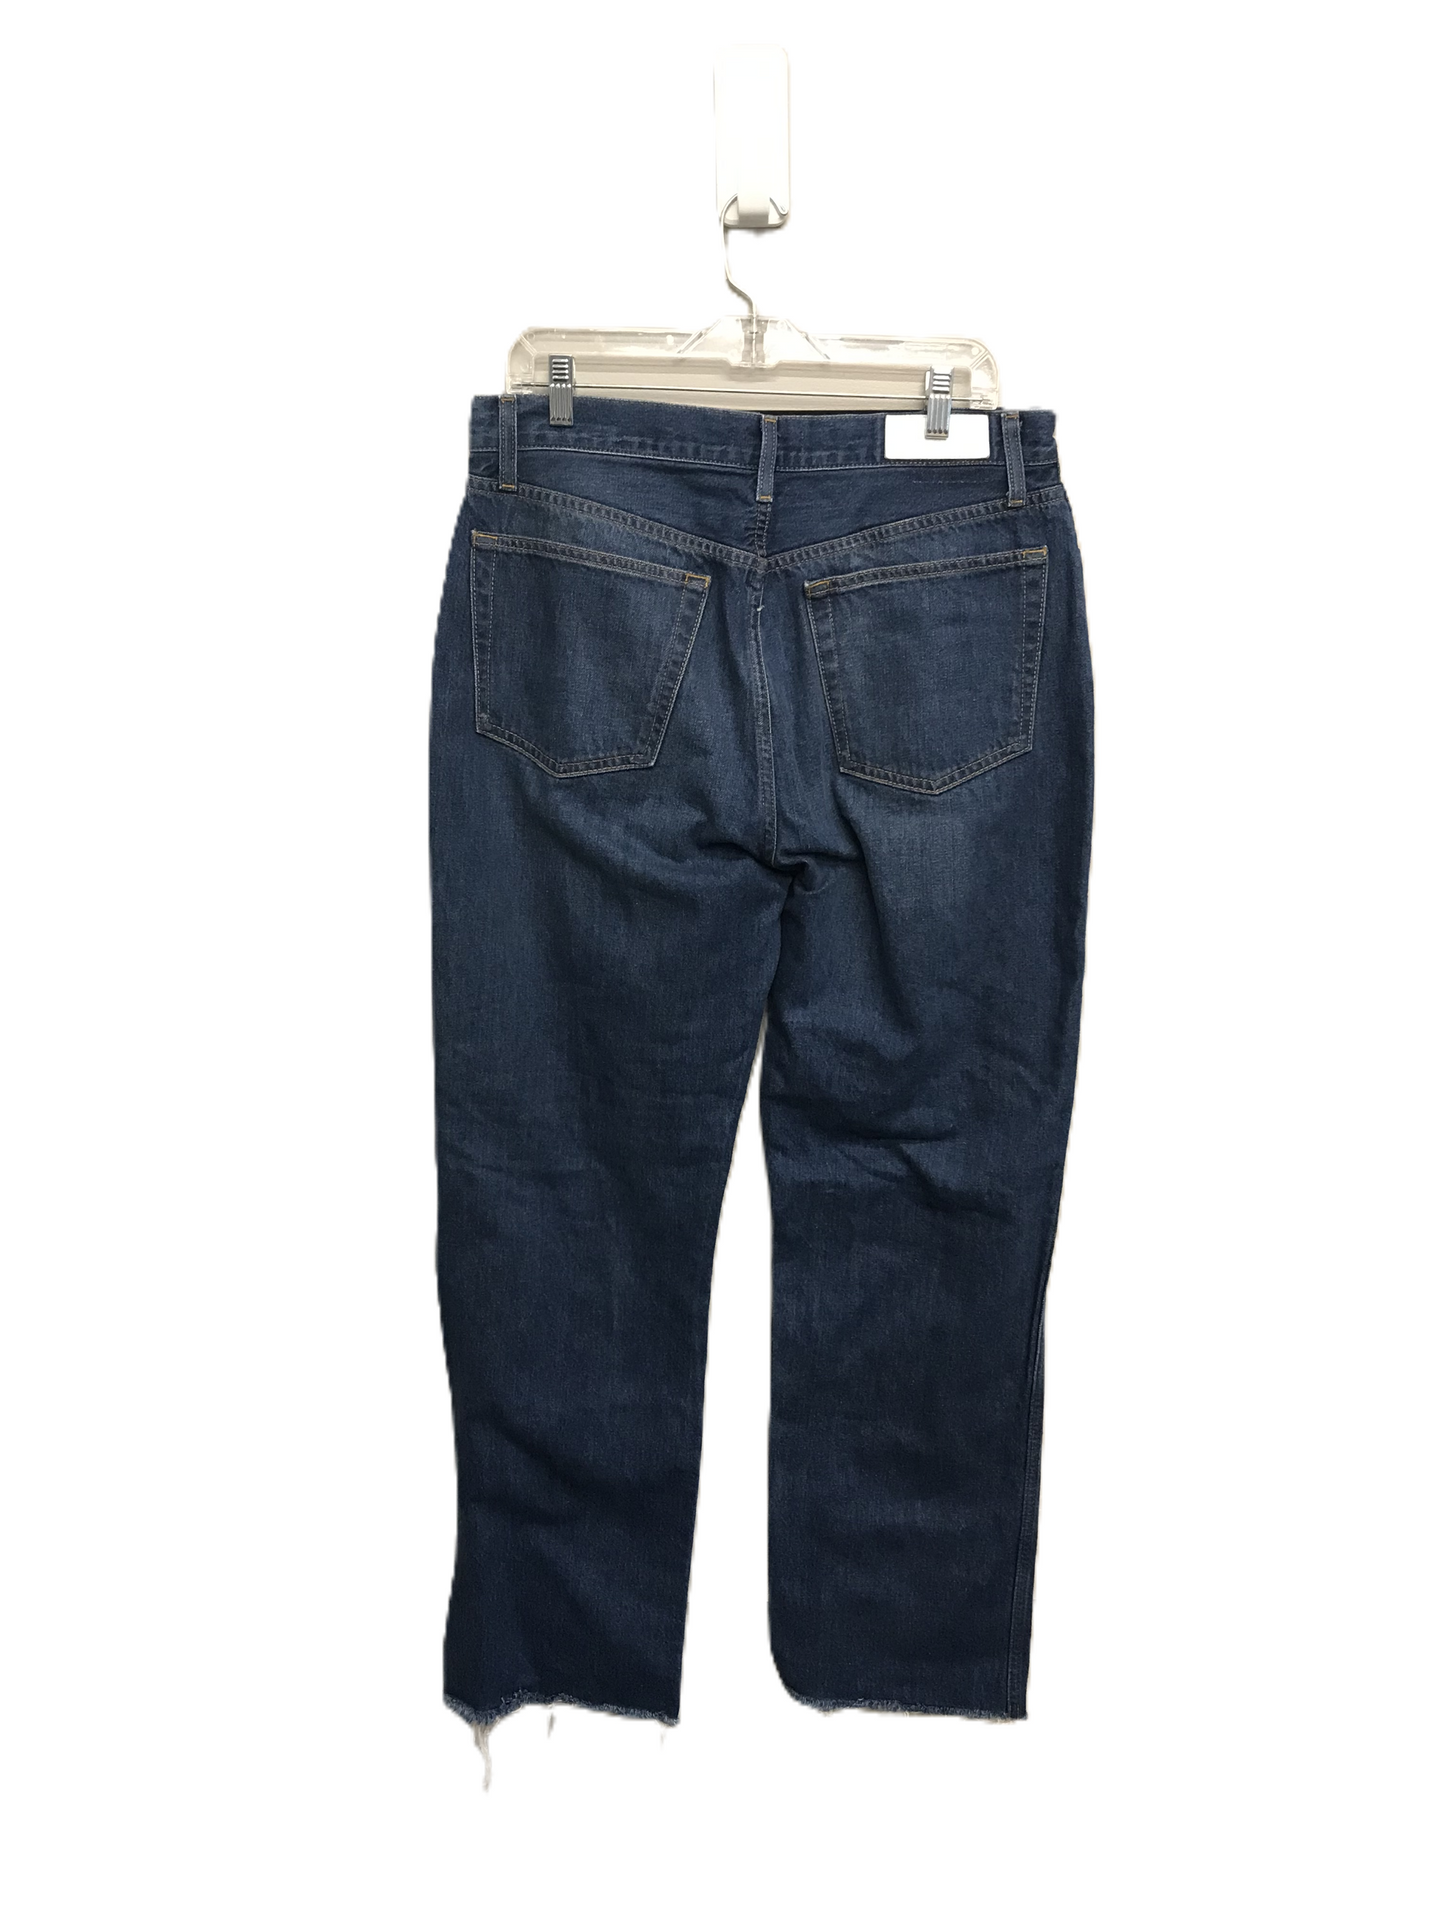 Blue Denim Jeans Wide Leg By Nordstrom, Size: 12